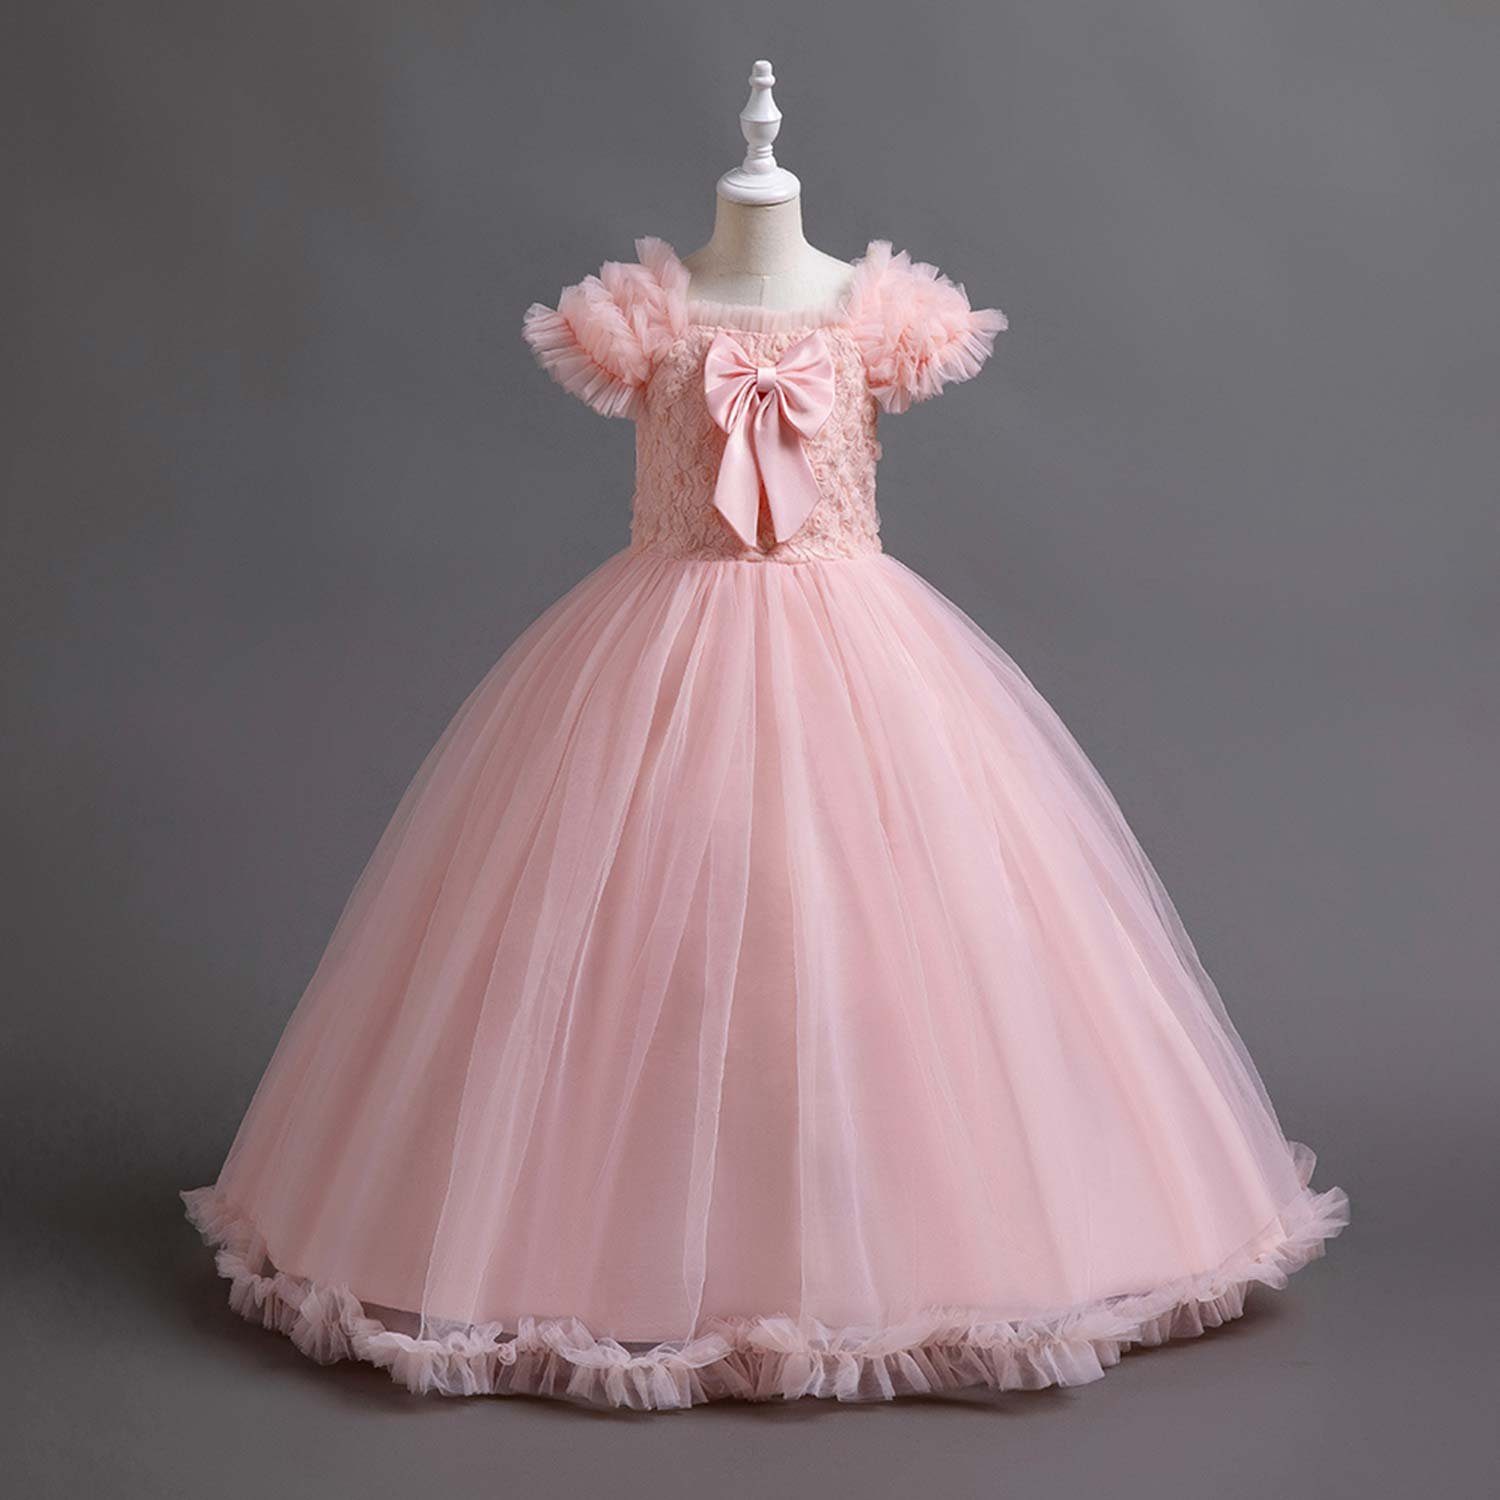 Daisred Ballkleid Rosa Abendkleider Tüllkleid Kinderkleider Prinzessinnenkleider